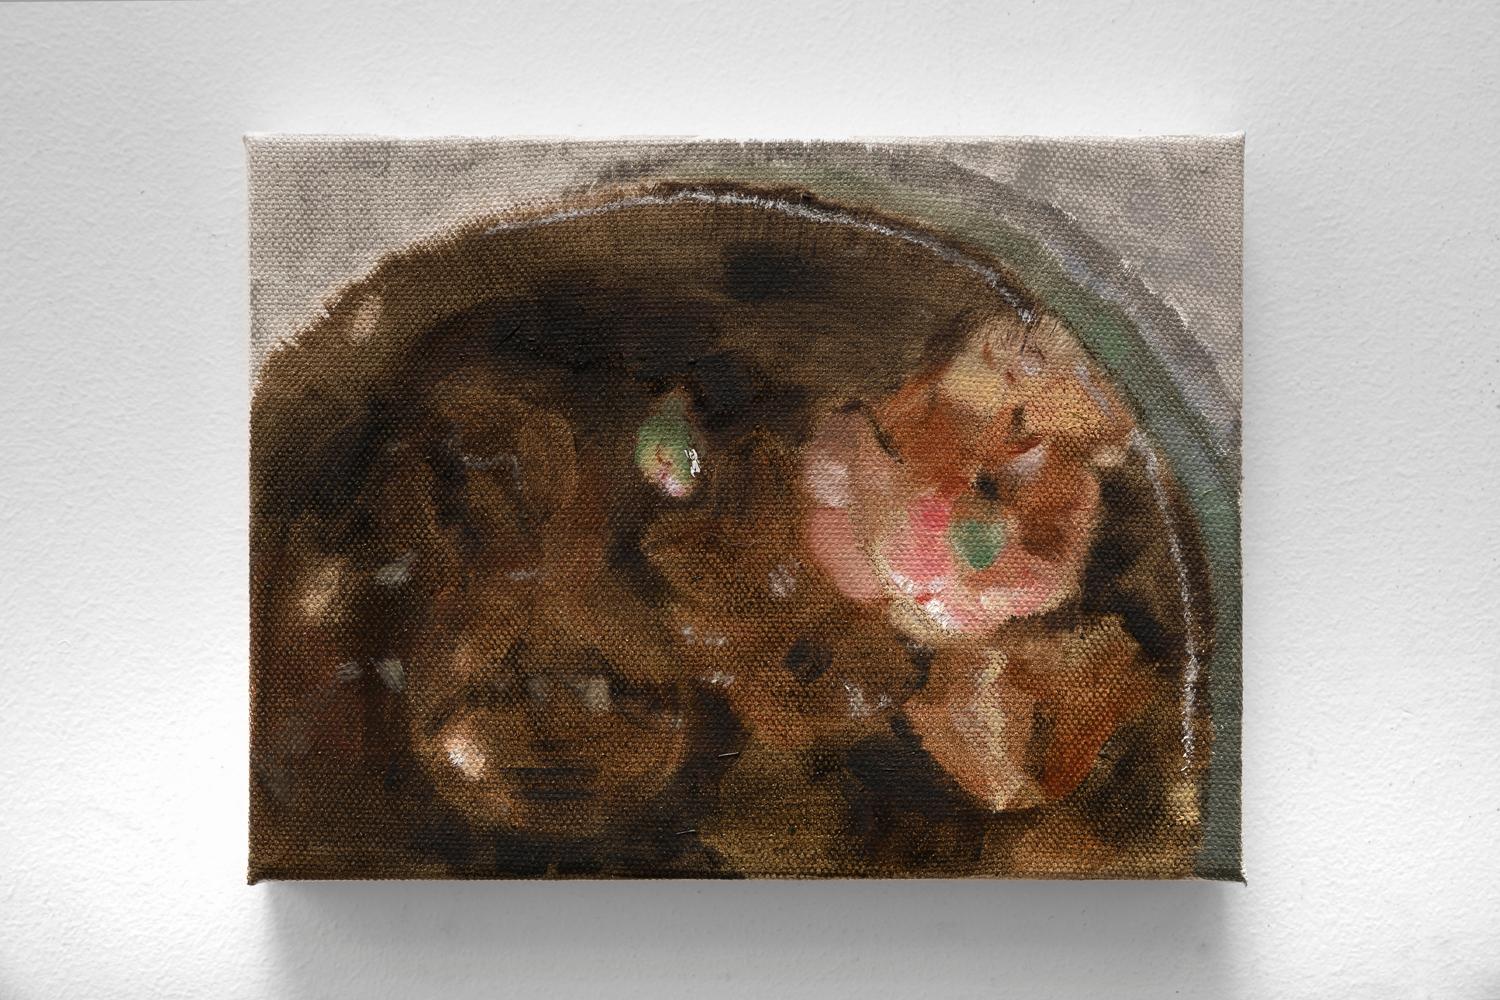 Spent (Camellias in Bird Bath), 7 Mar 14 - Painting by Patty Wickman